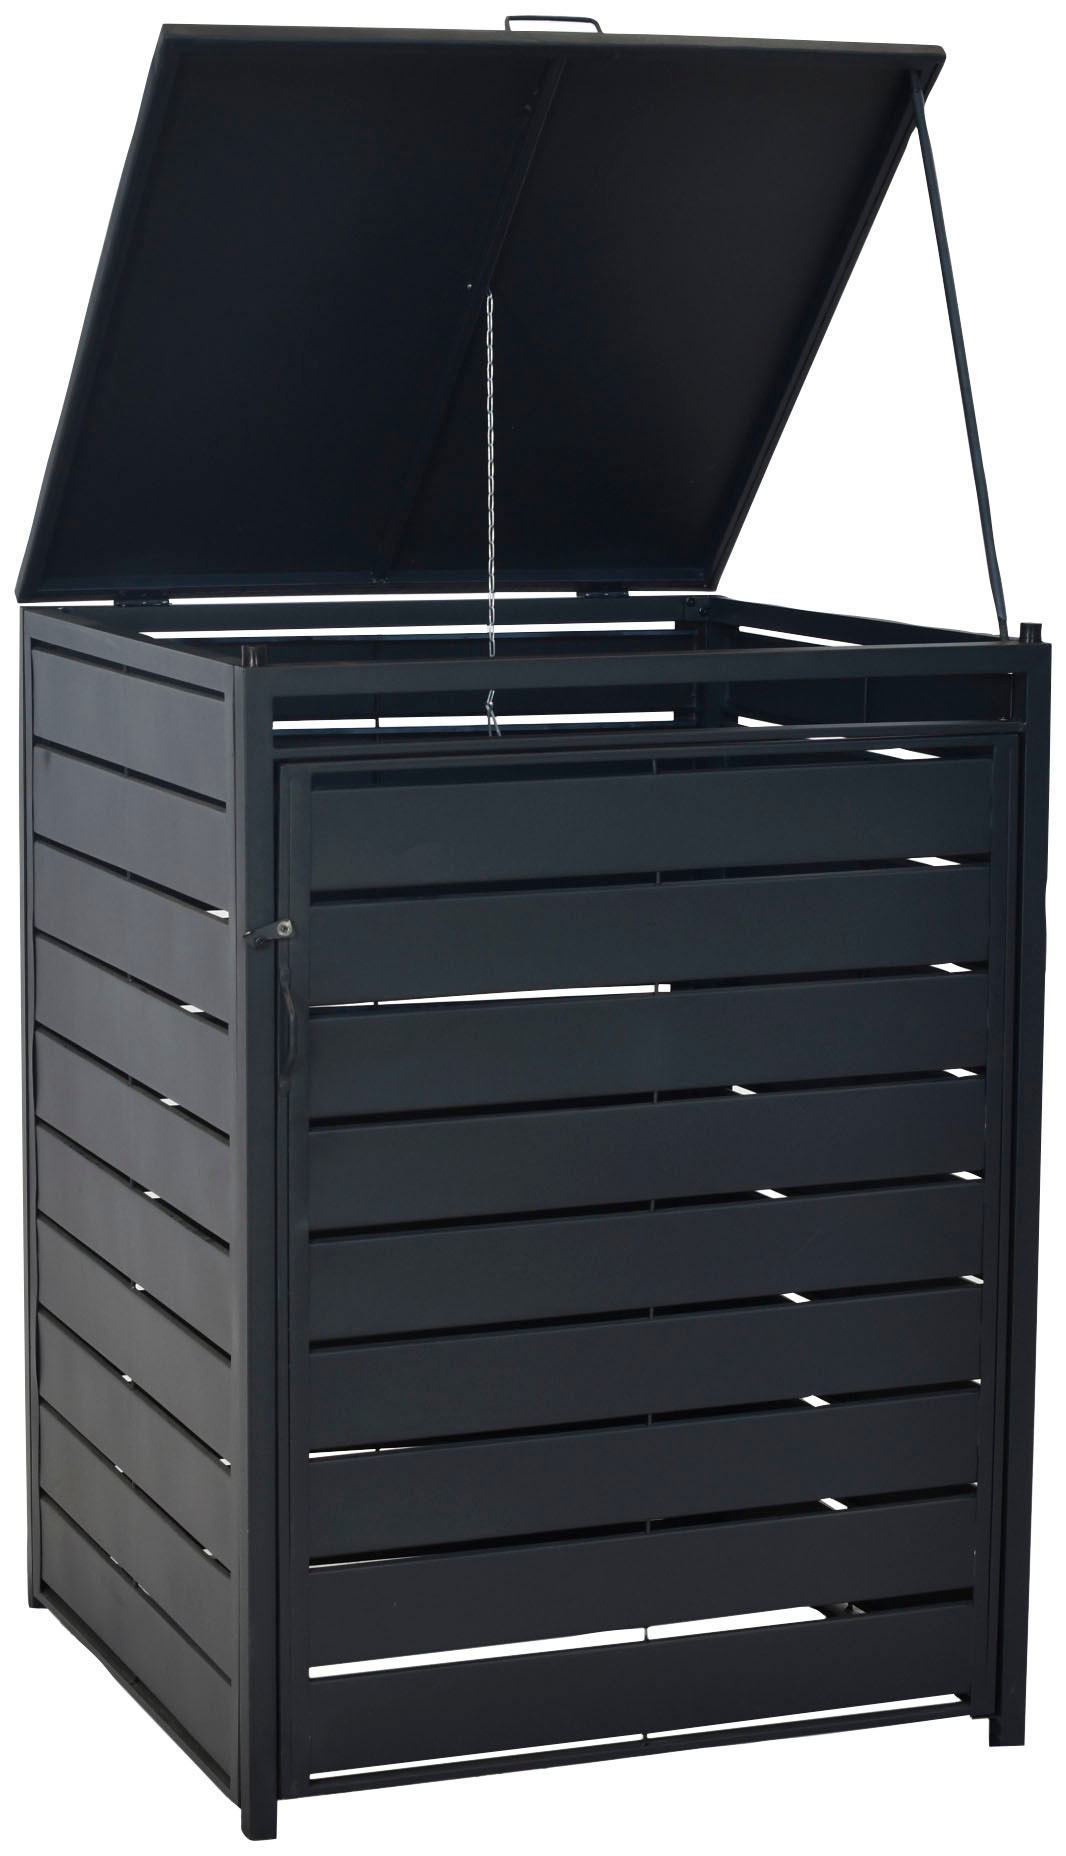 MERXX Mülltonnenbox »Basis Alu/Stahl«, für 120 Liter Mülltonne